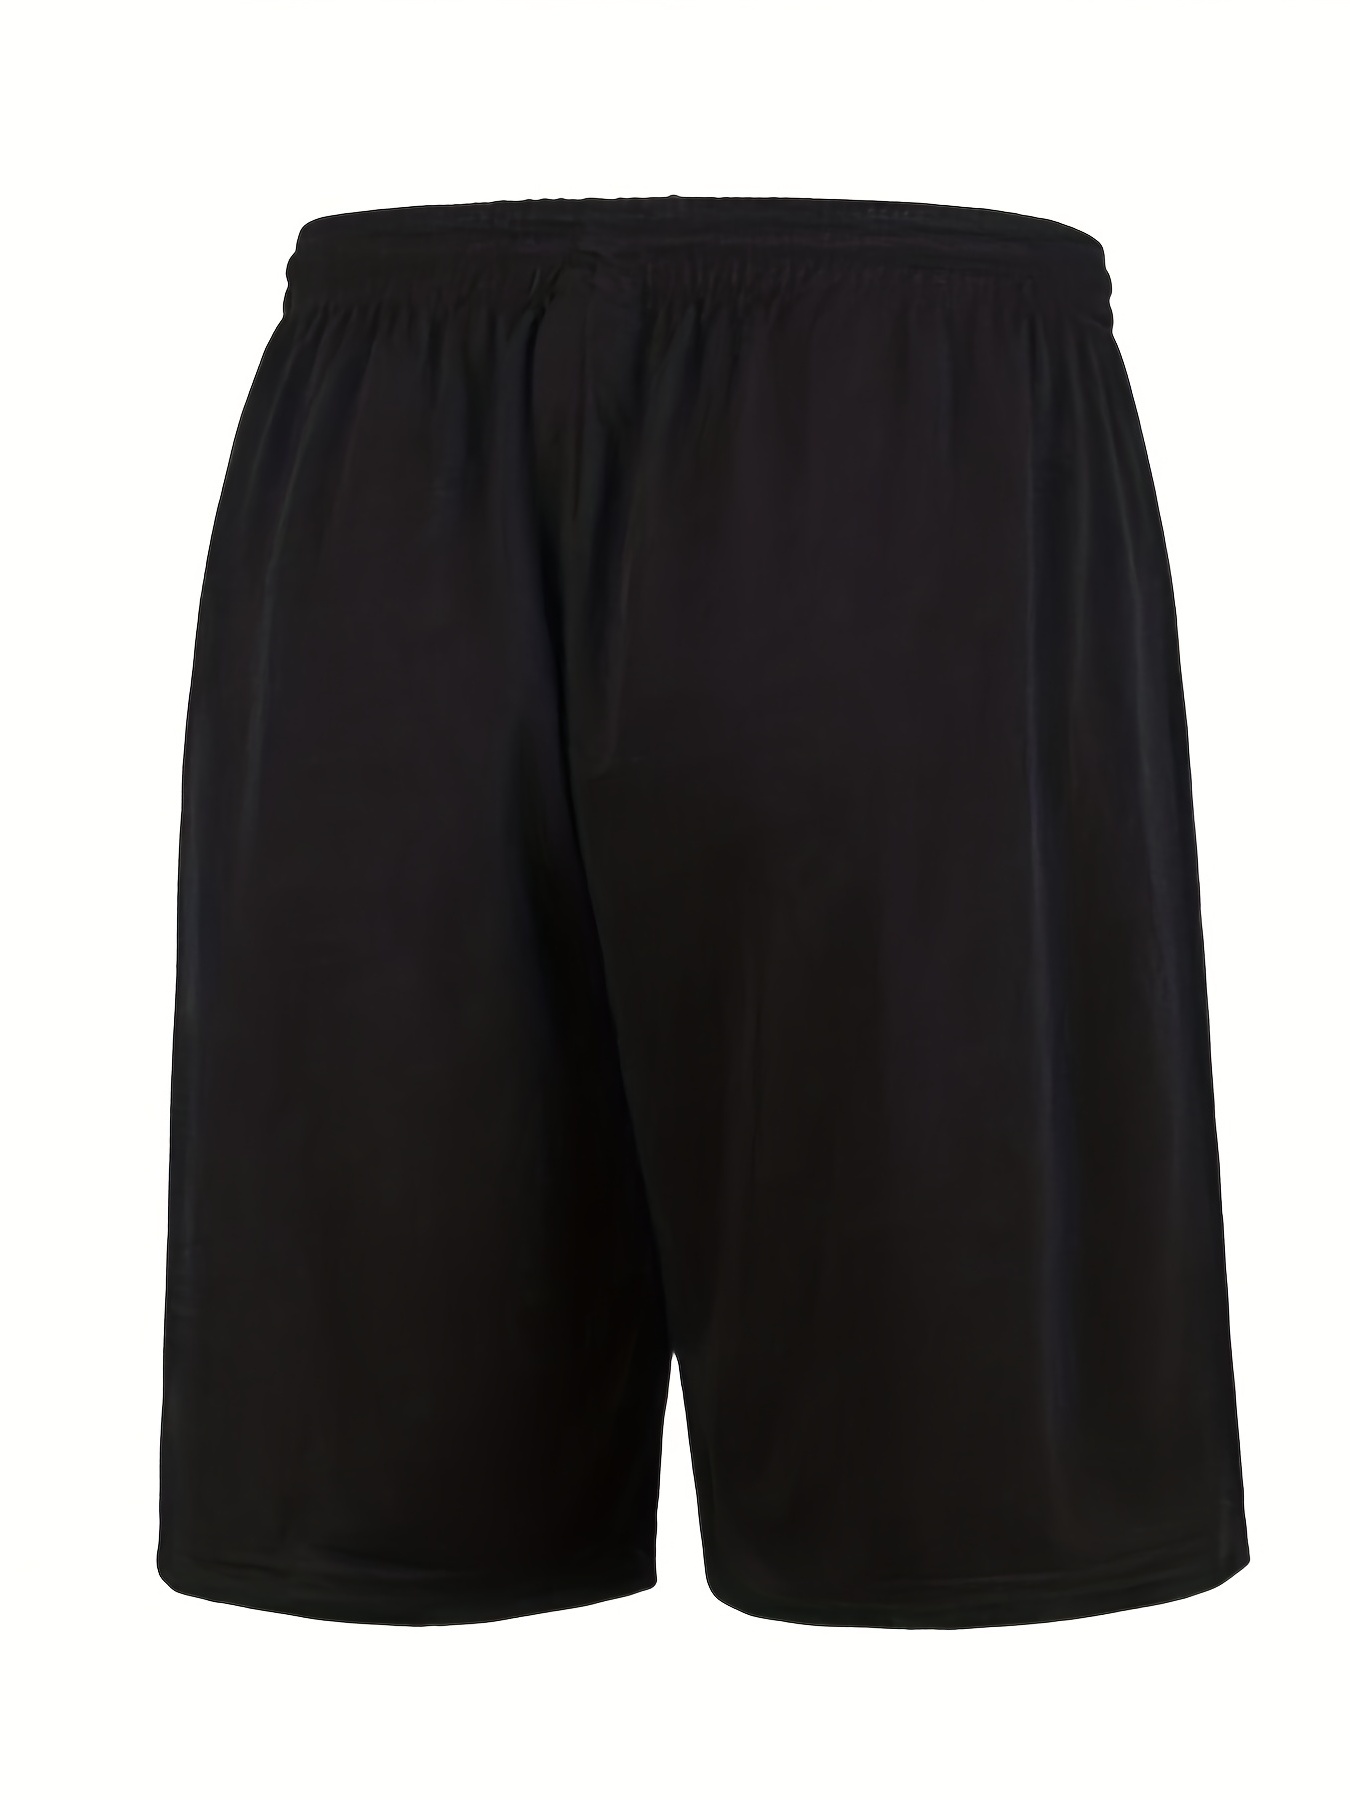 clipart basketball shorts